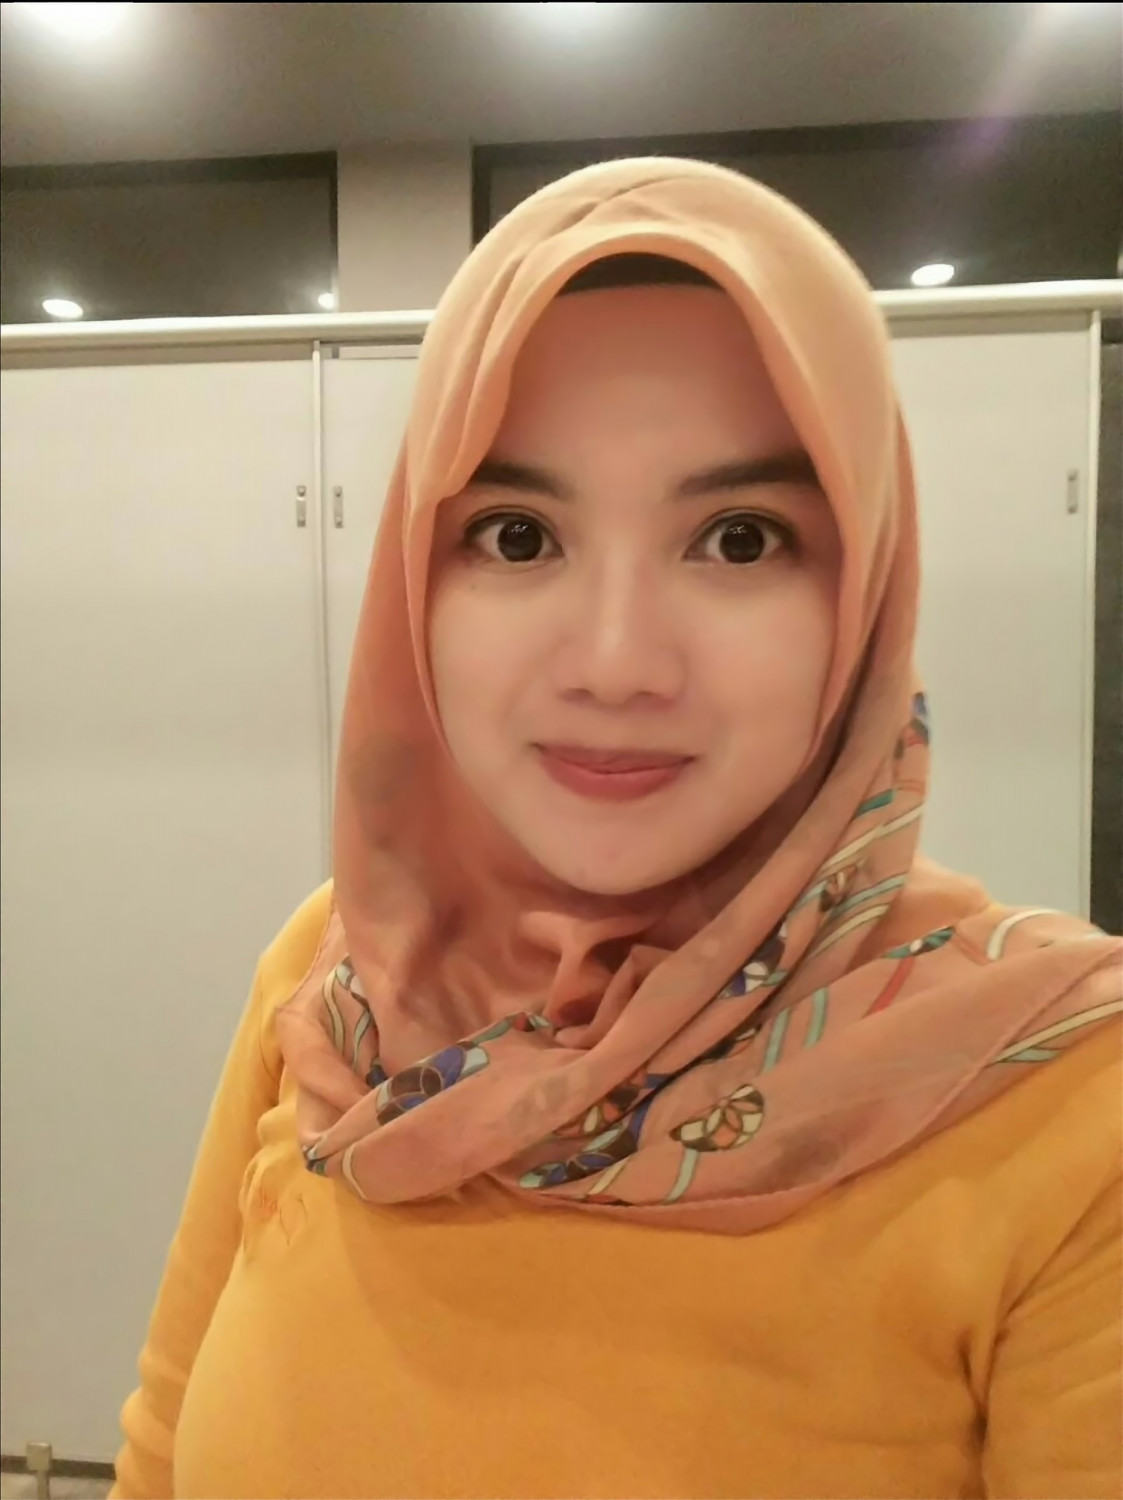 JP-0010 Malaysian muslim girl - Porn Videos and Photos pic